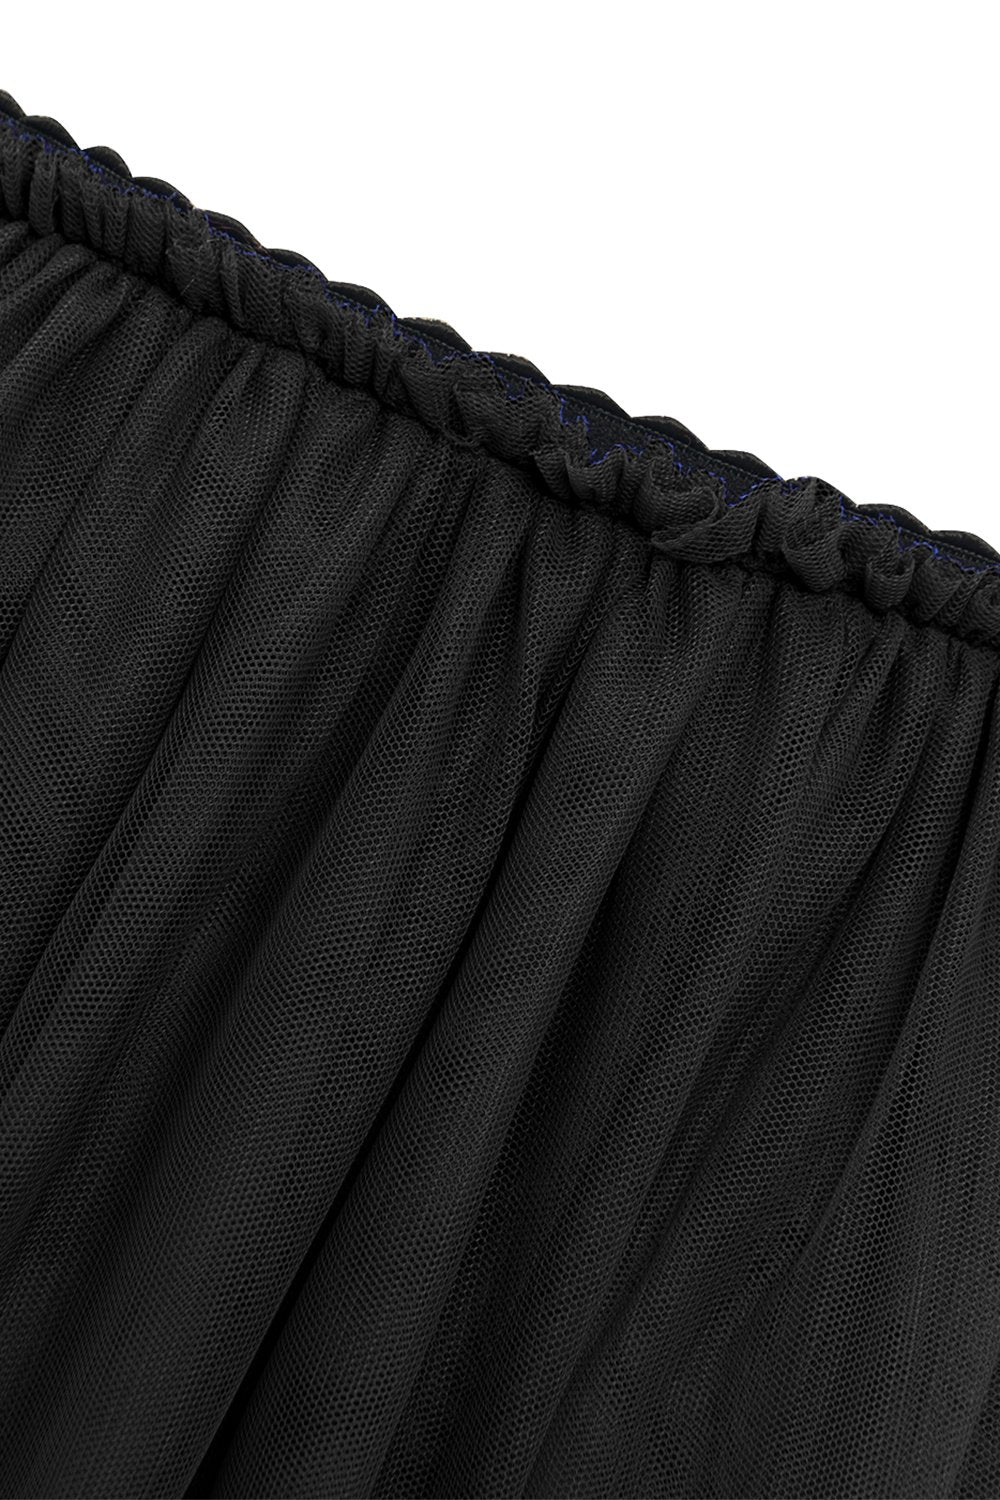 Black TuTu Skirt with Sequin